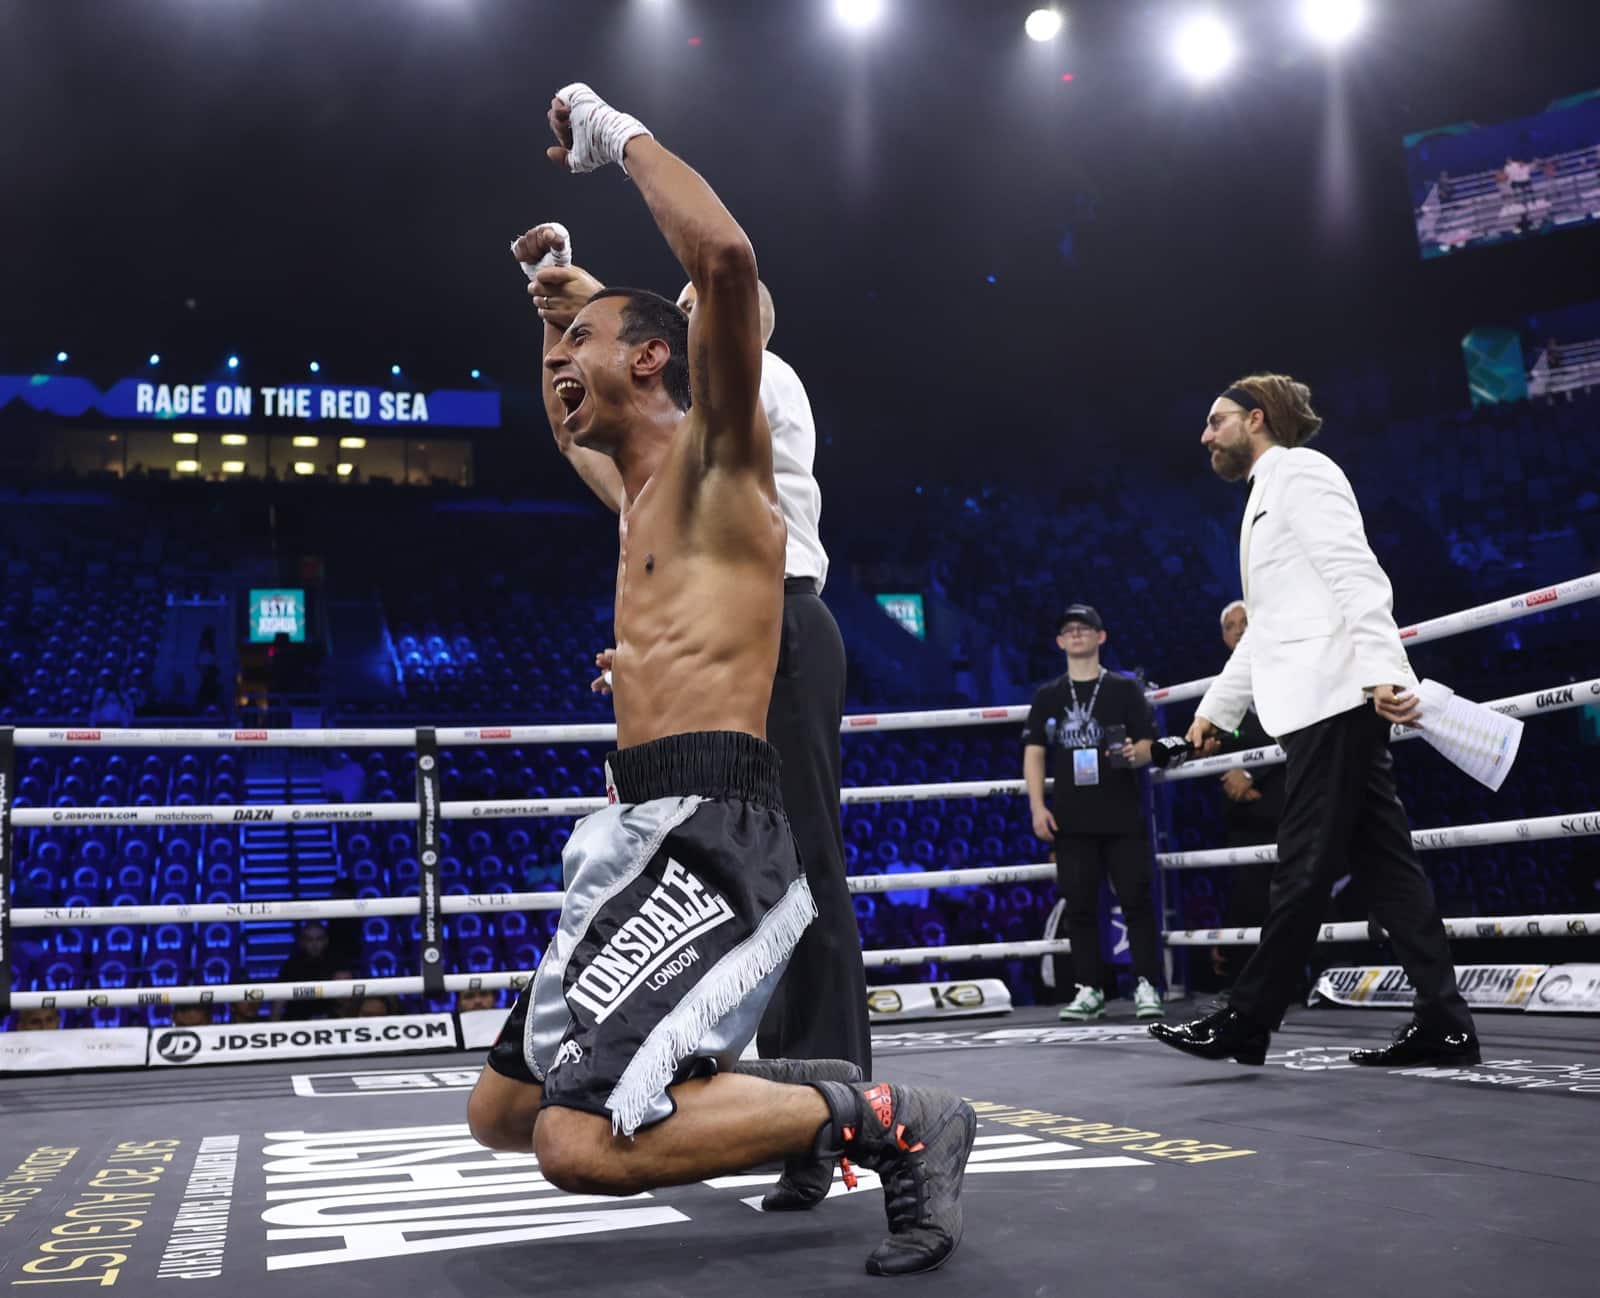 Rashed “Money Kicks” Belhasa Loses His Pro Debut In Jeddah - Boxing Results